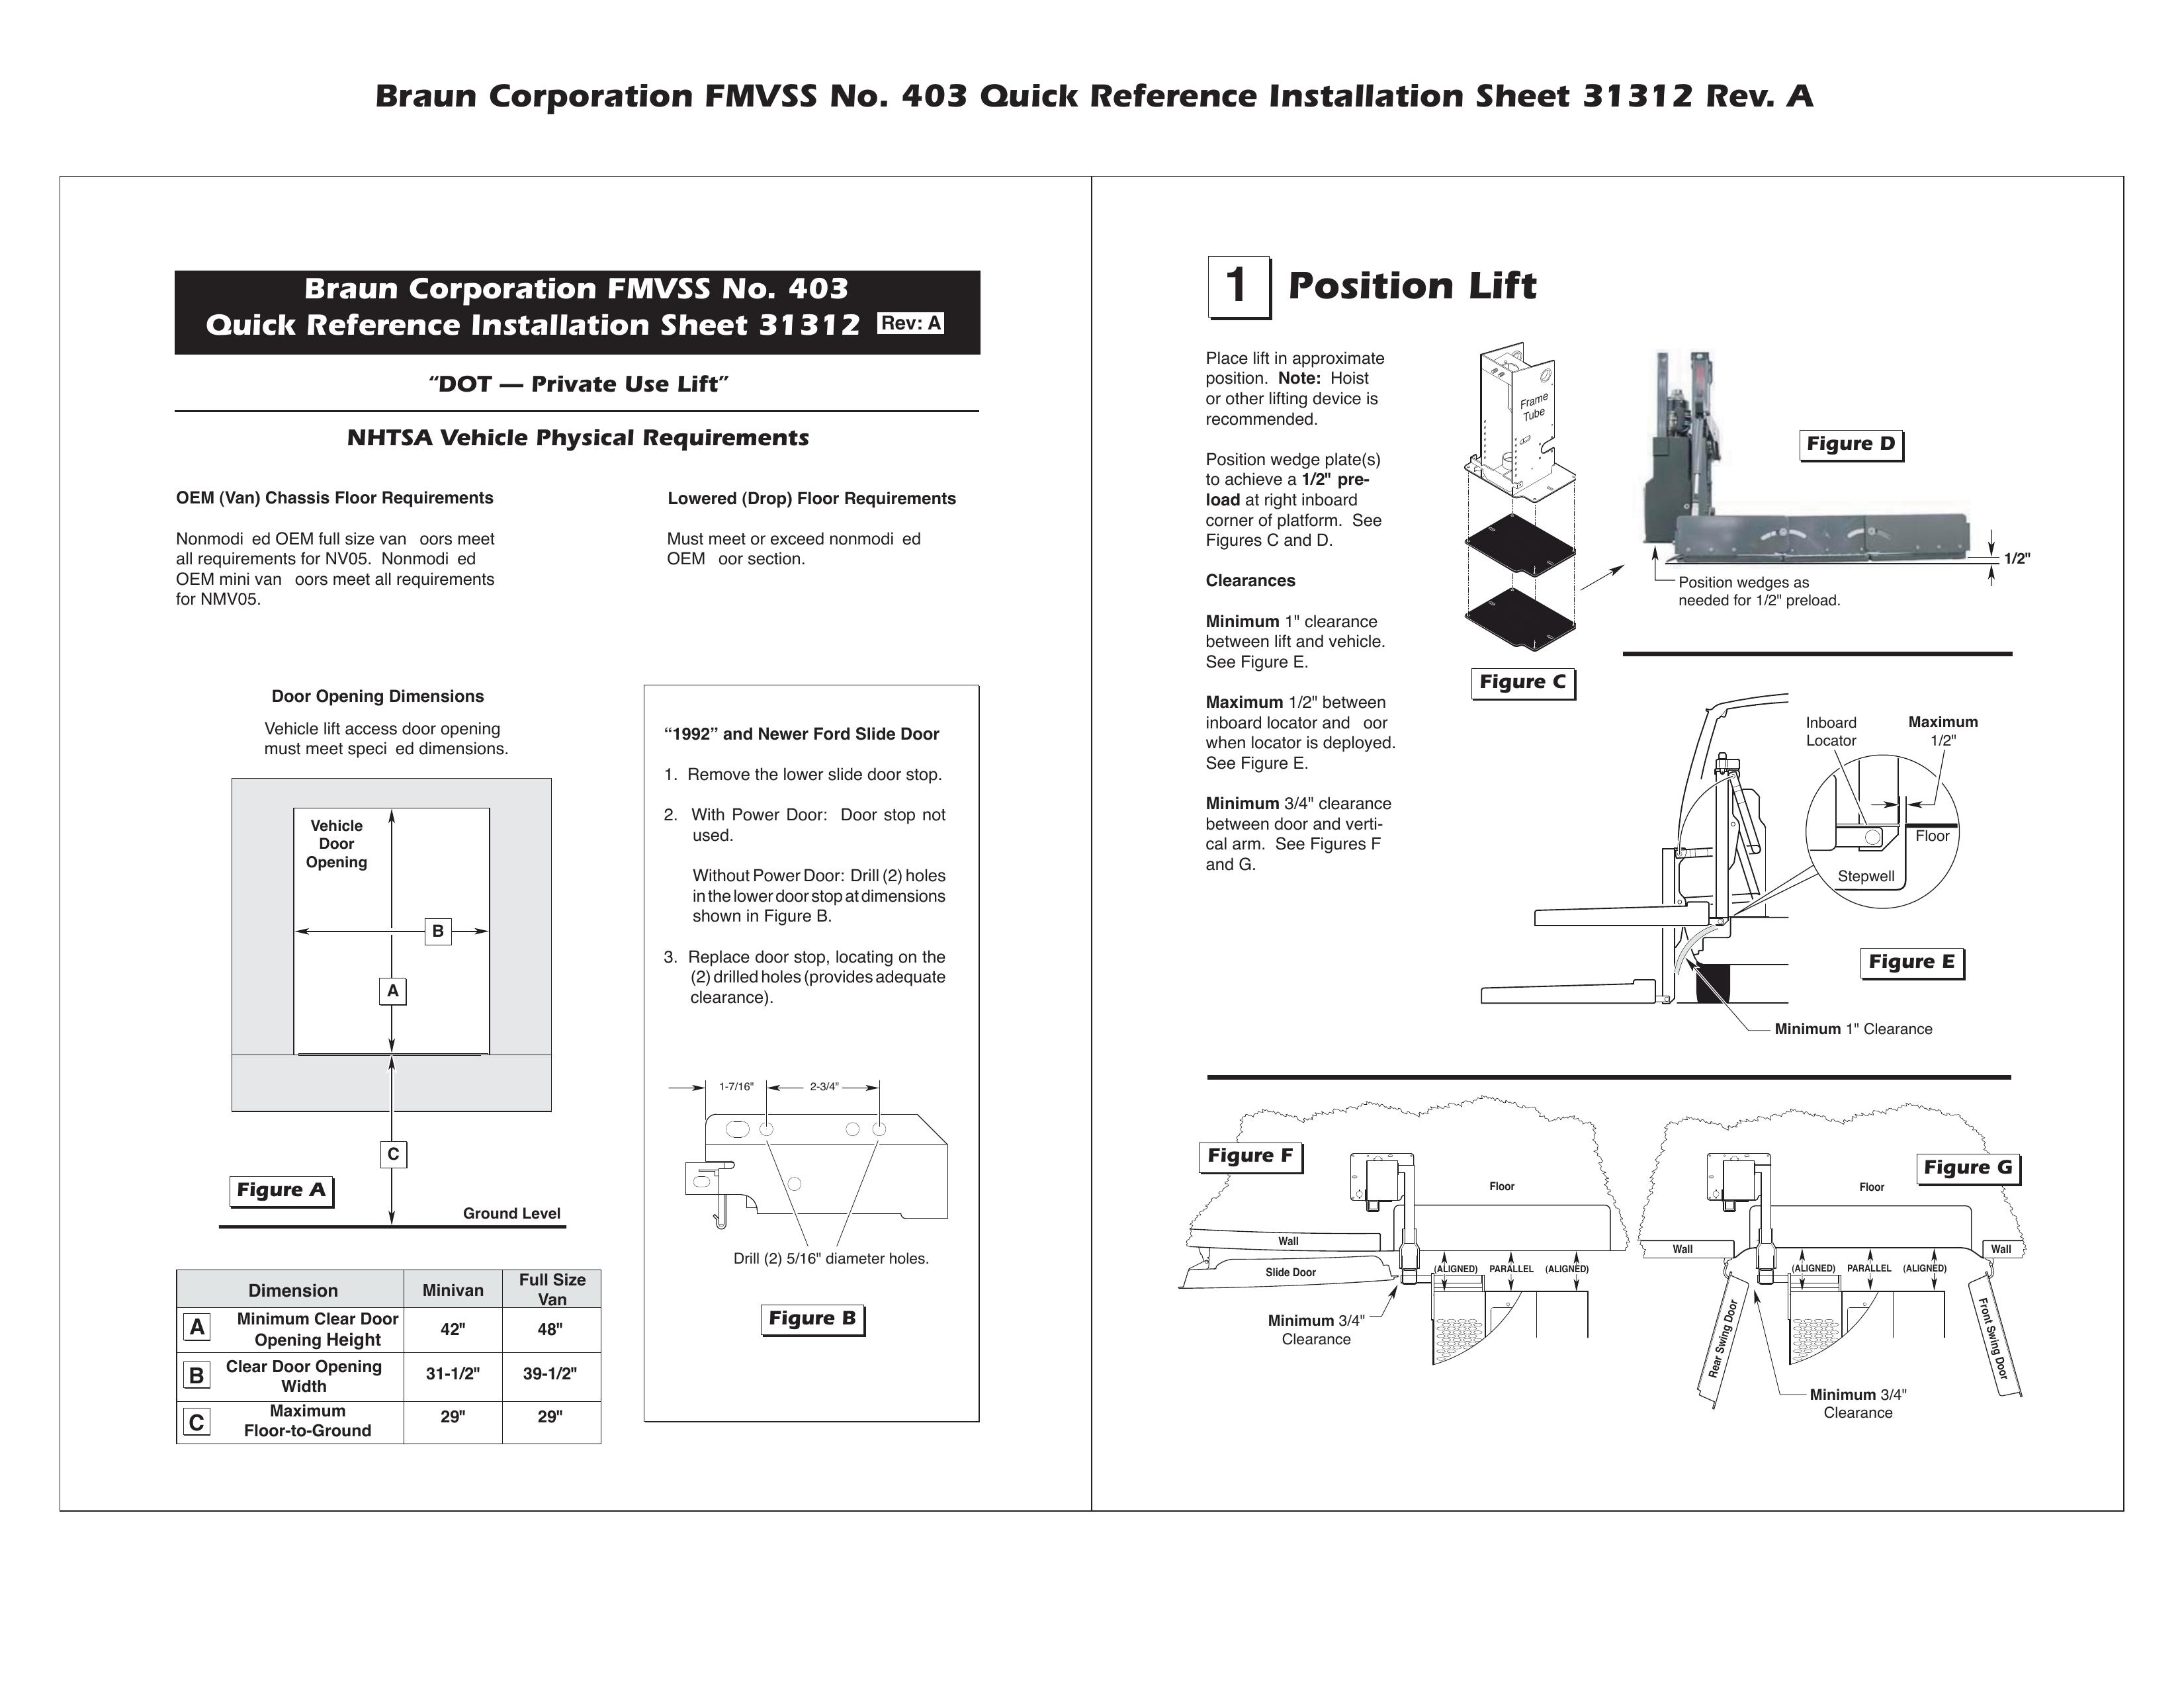 Braun FMVSS NO. 403 Personal Lift User Manual